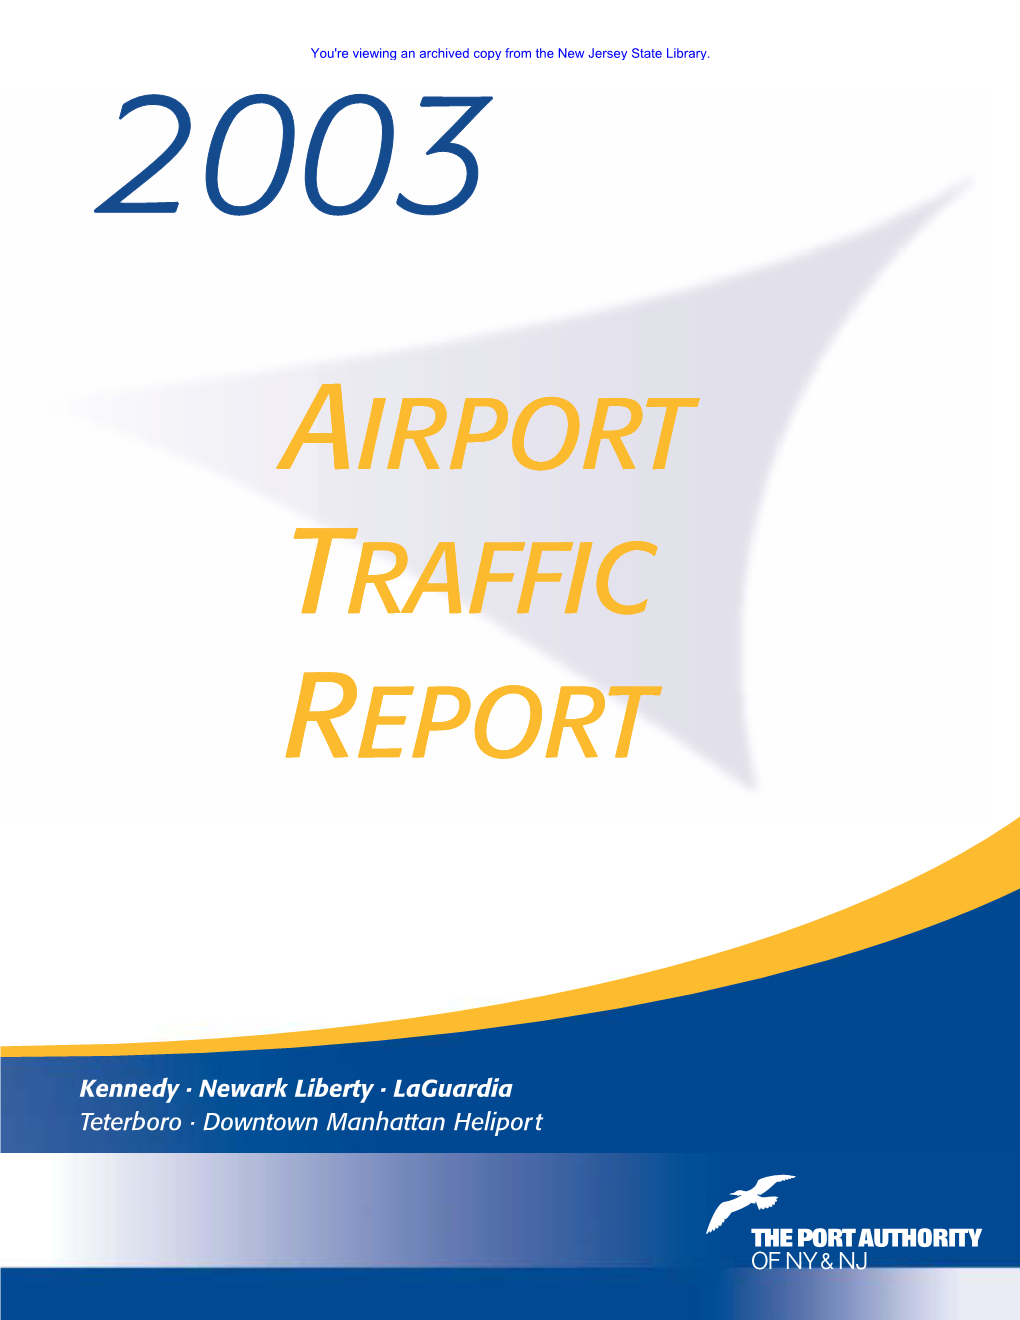 Air Traffic Report Cover